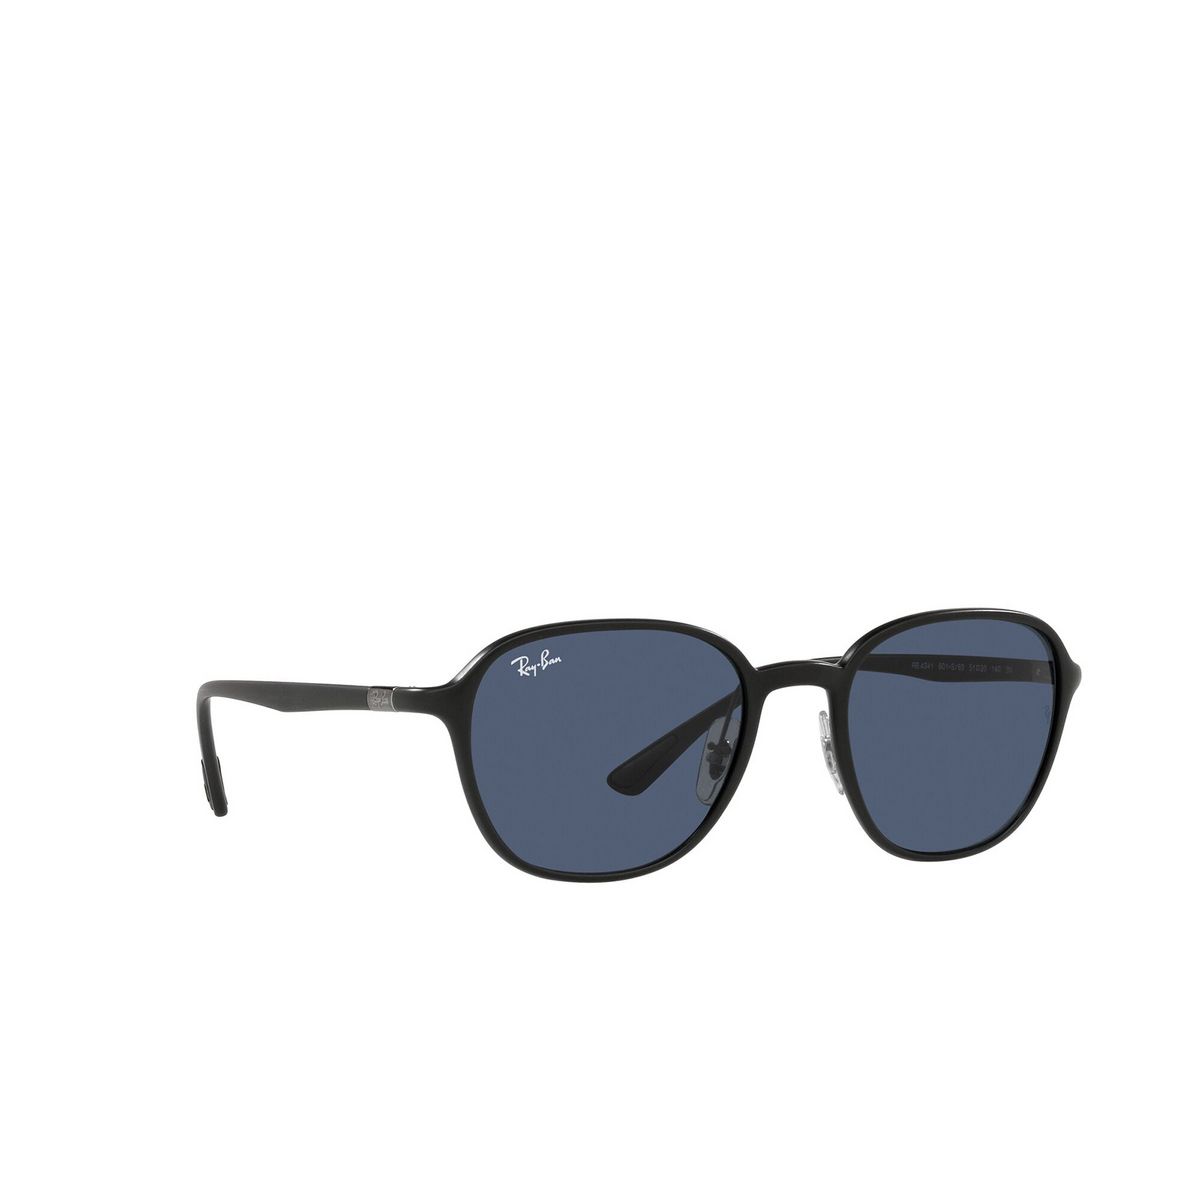 Ray-Ban® Square Sunglasses: RB4341 color Sanding Black 601S80 - three-quarters view.